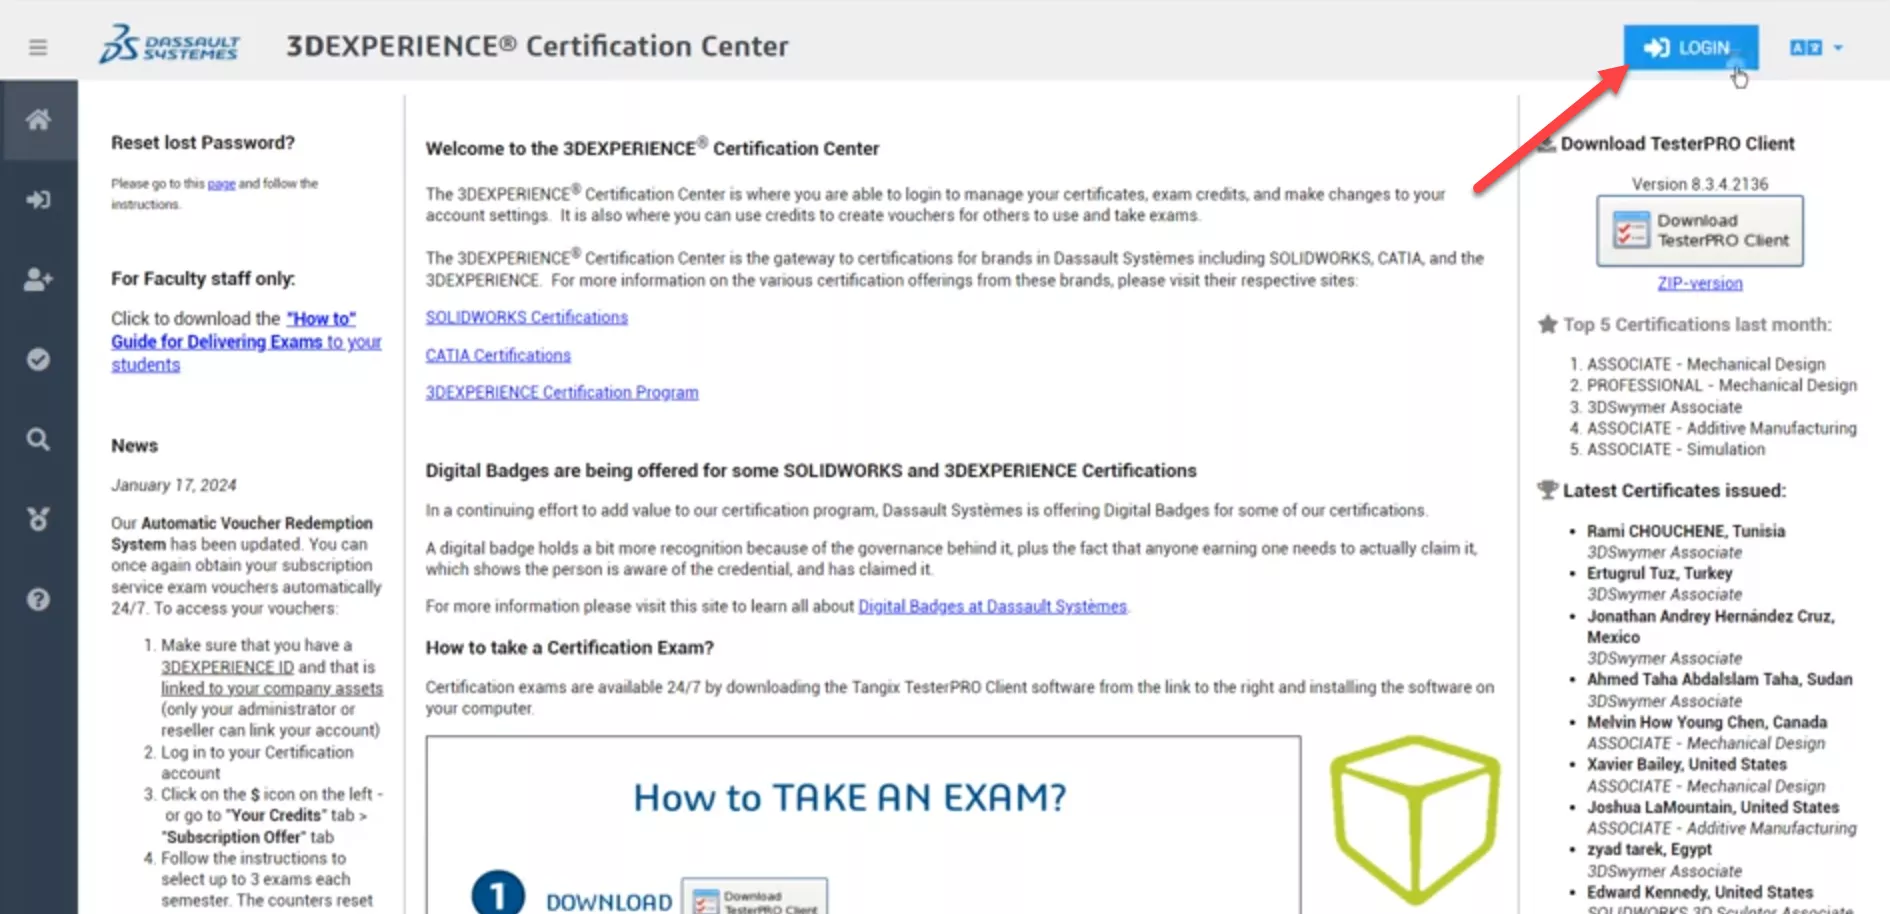 3DEXPERIENCE Certification Center Login